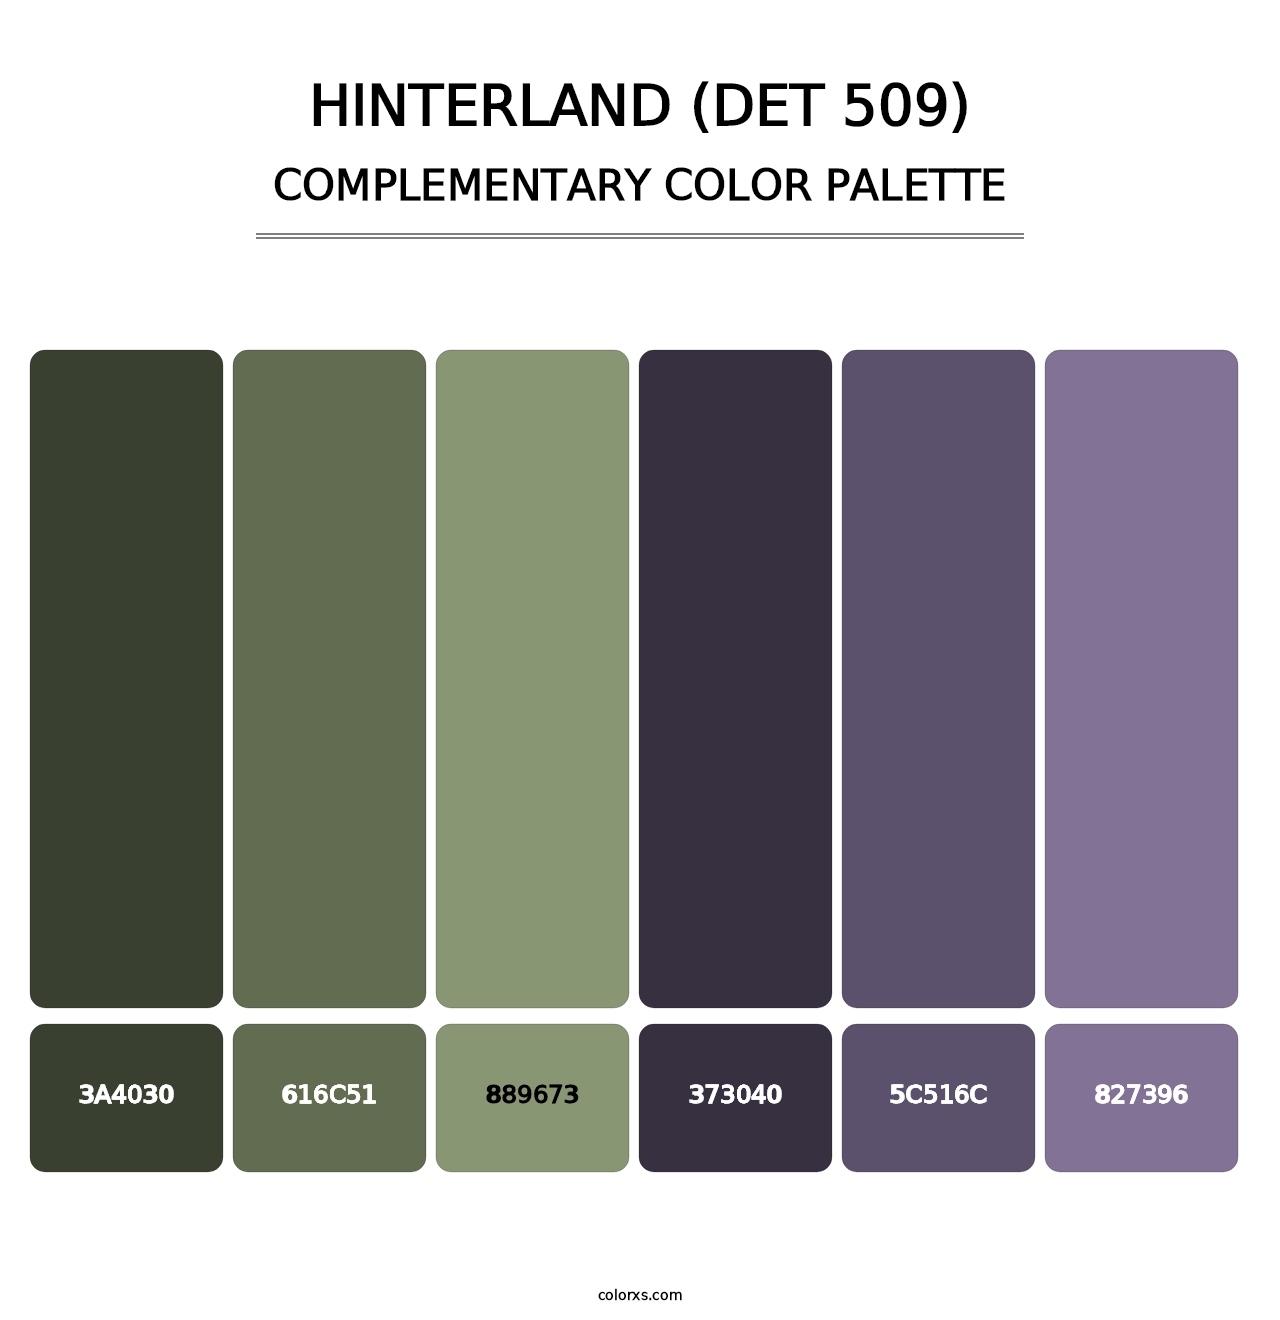 Hinterland (DET 509) - Complementary Color Palette